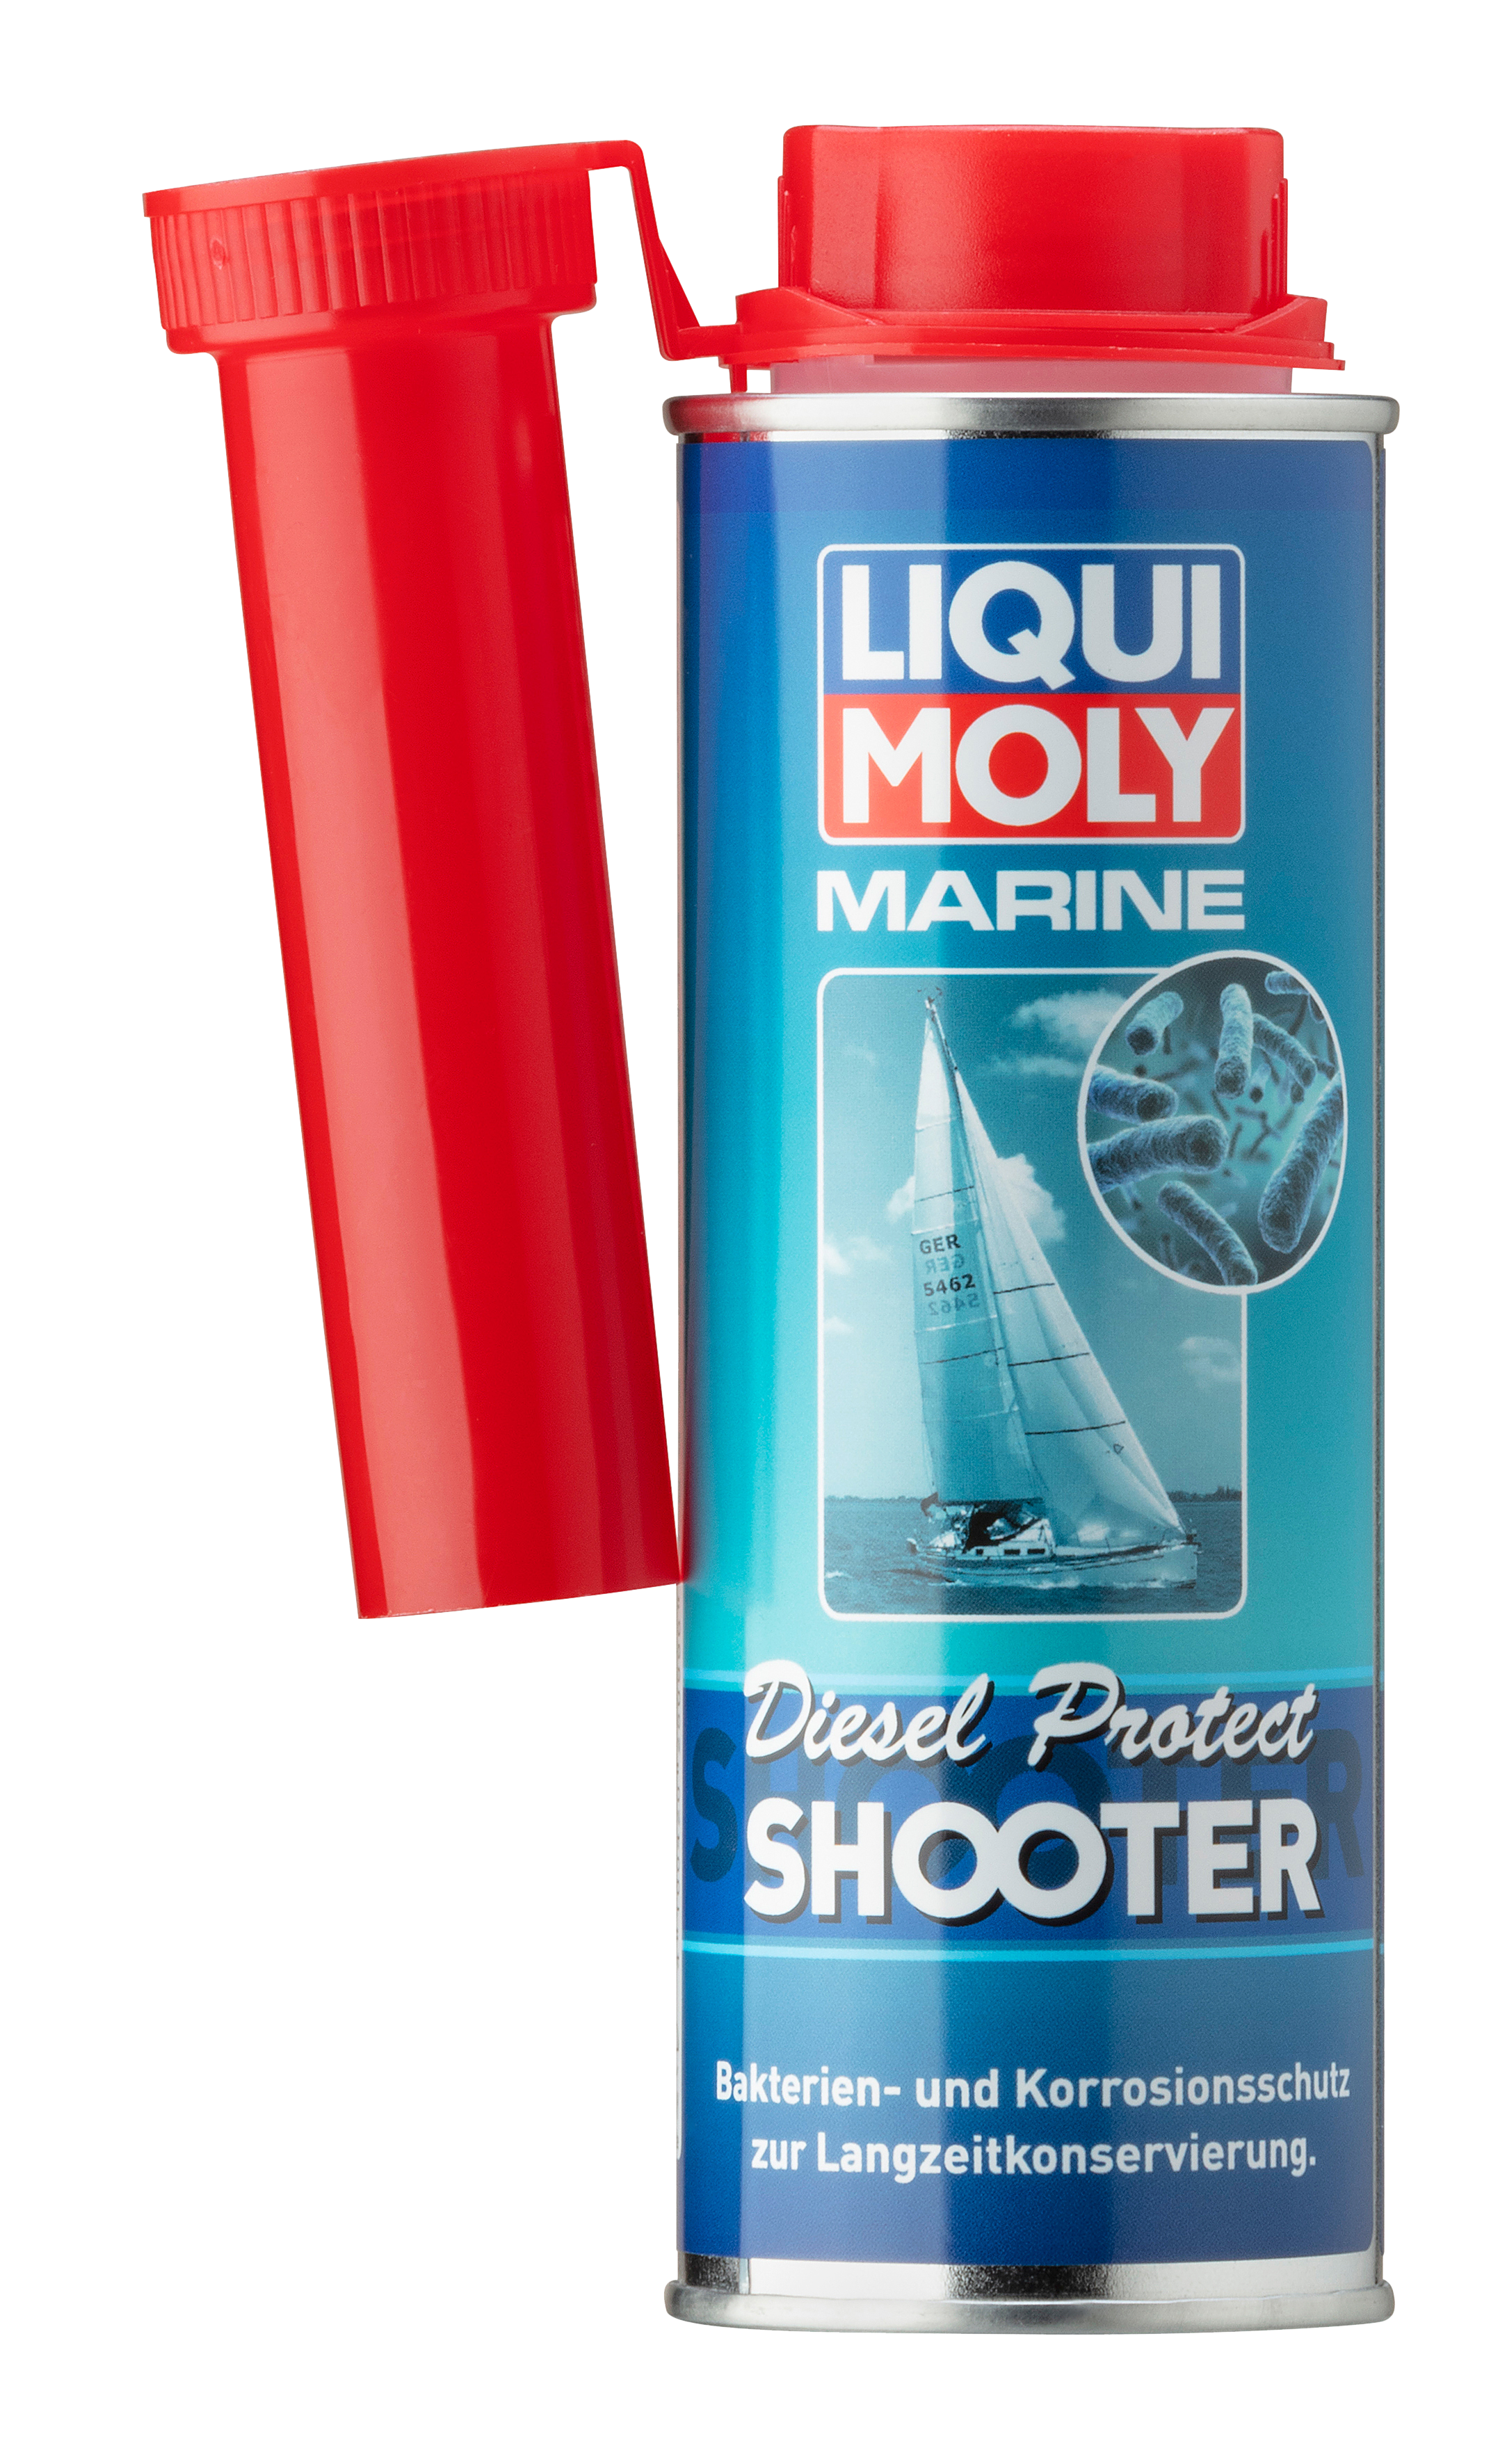 Liqui Moly Marine Diesel Protect Shooter 200 ml